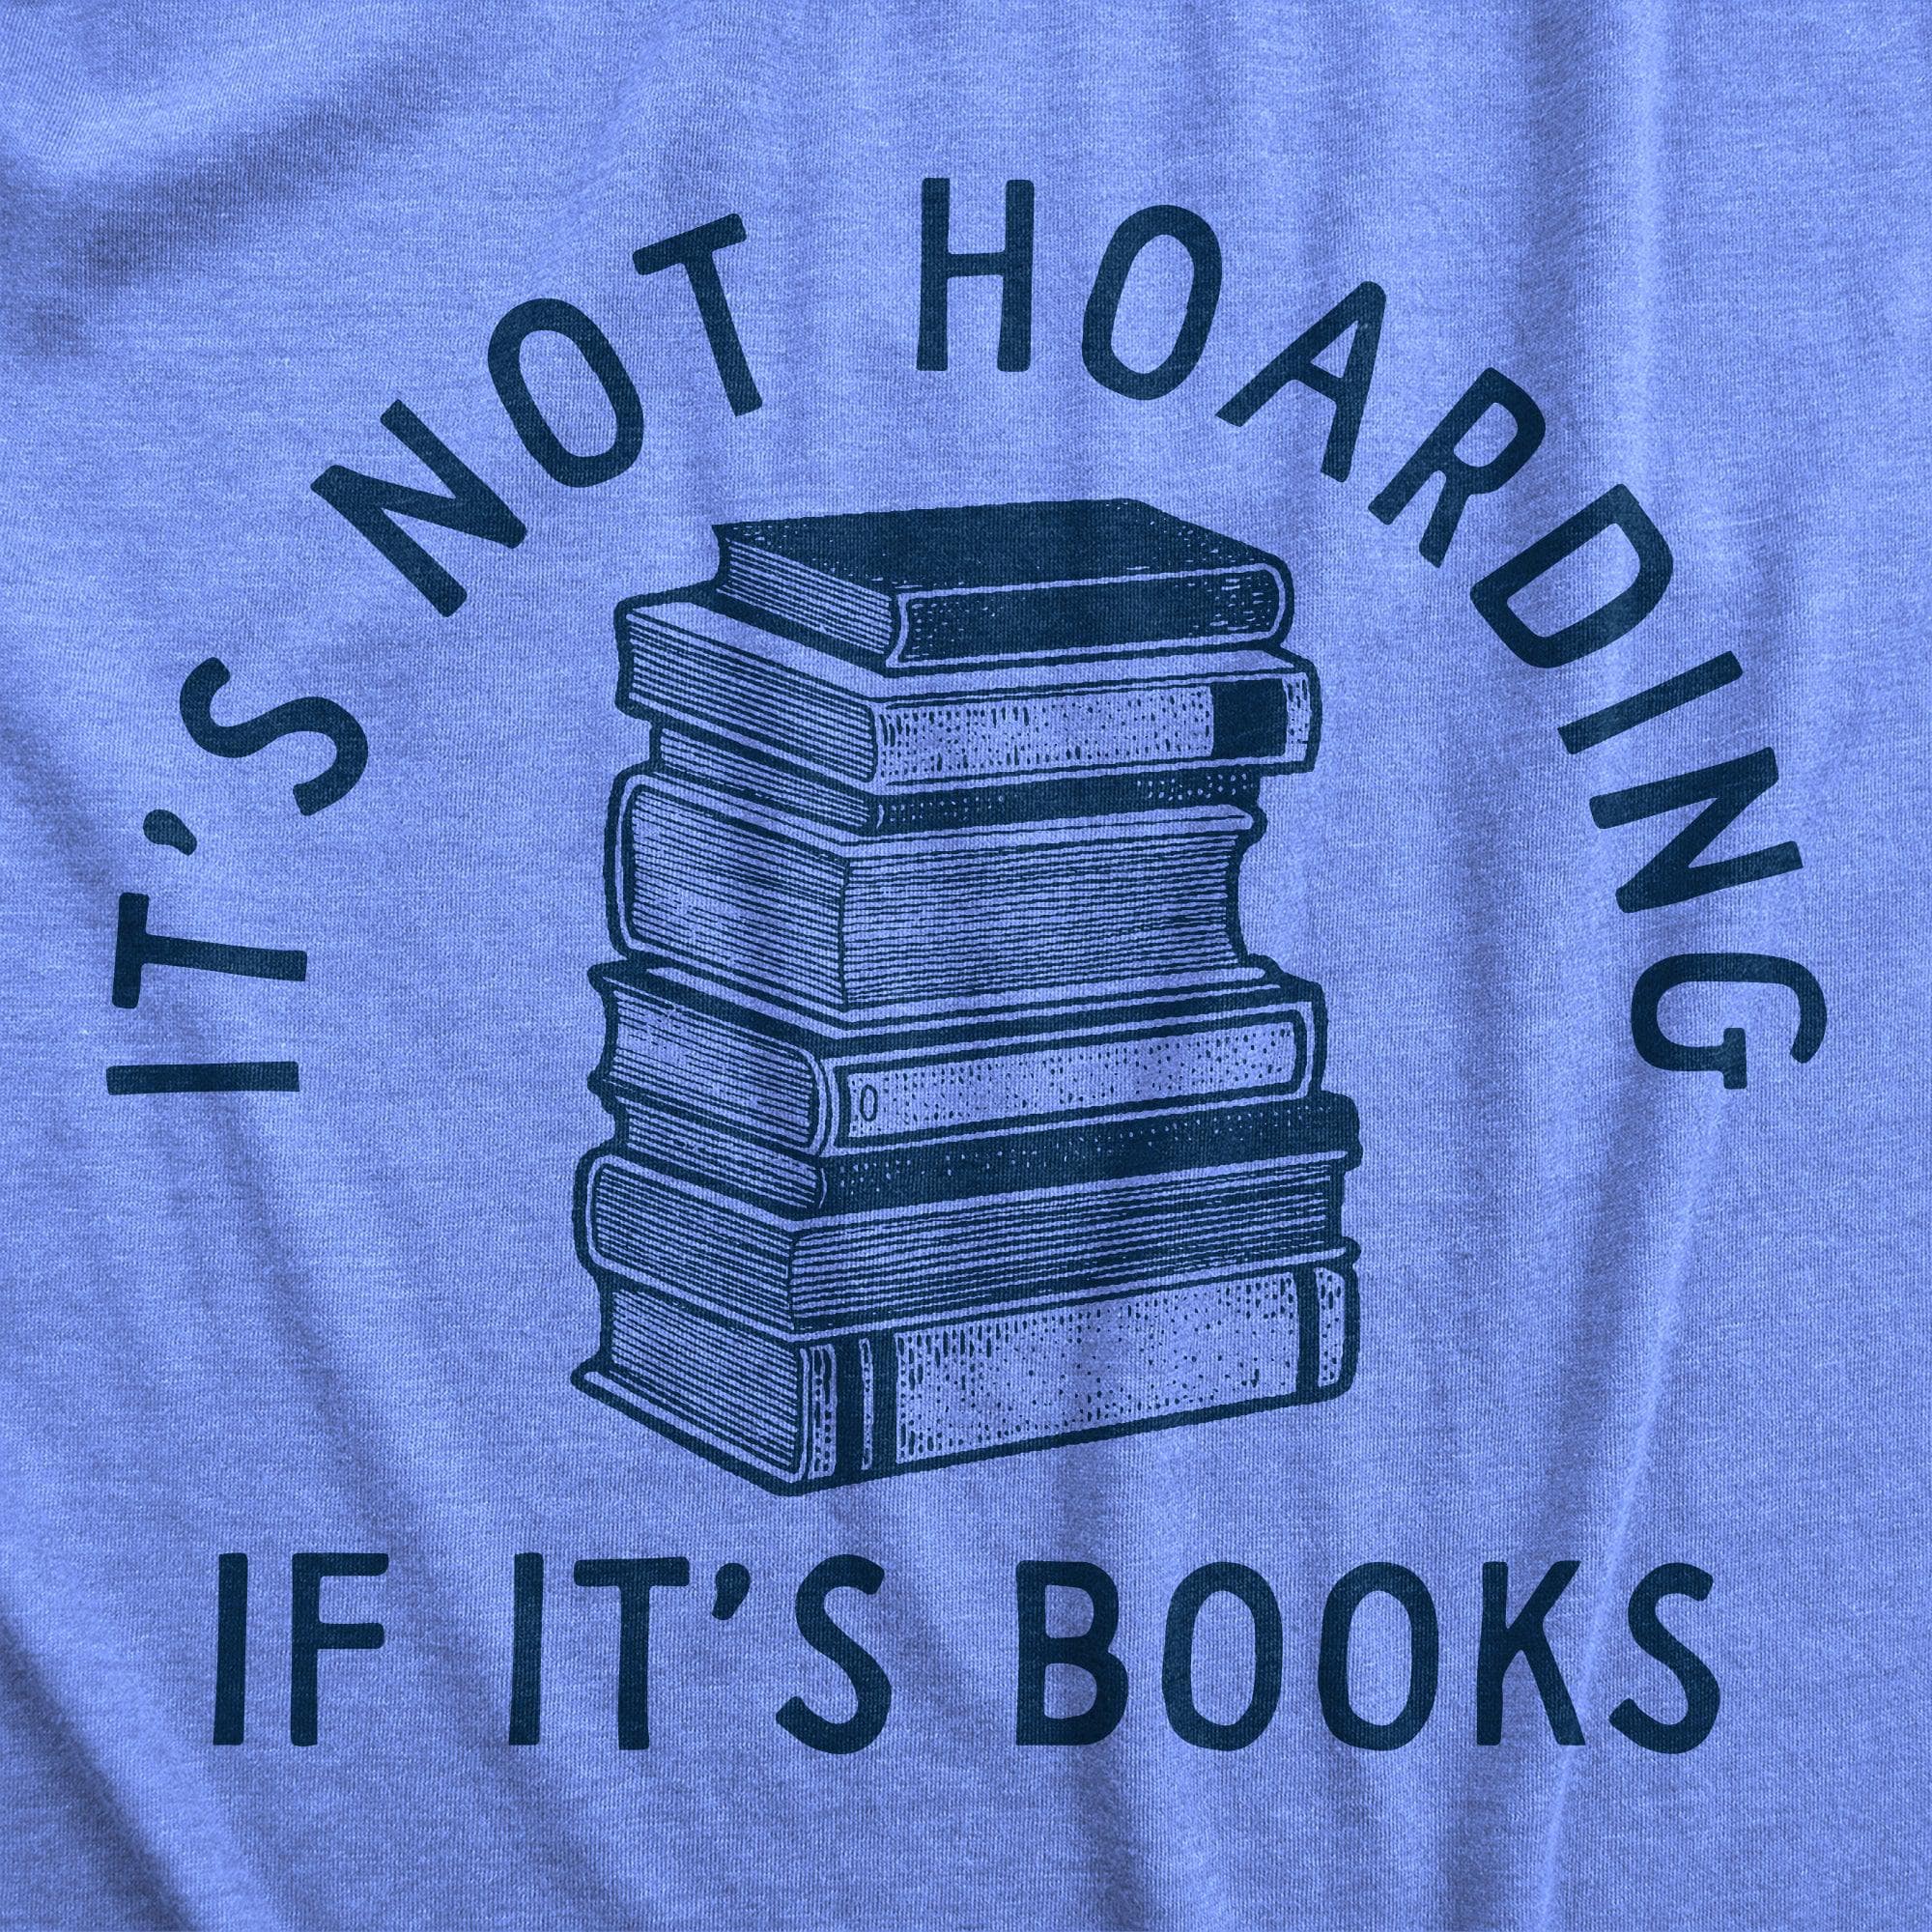 Its Not Hoarding If Its Books Men's Tshirt  -  Crazy Dog T-Shirts